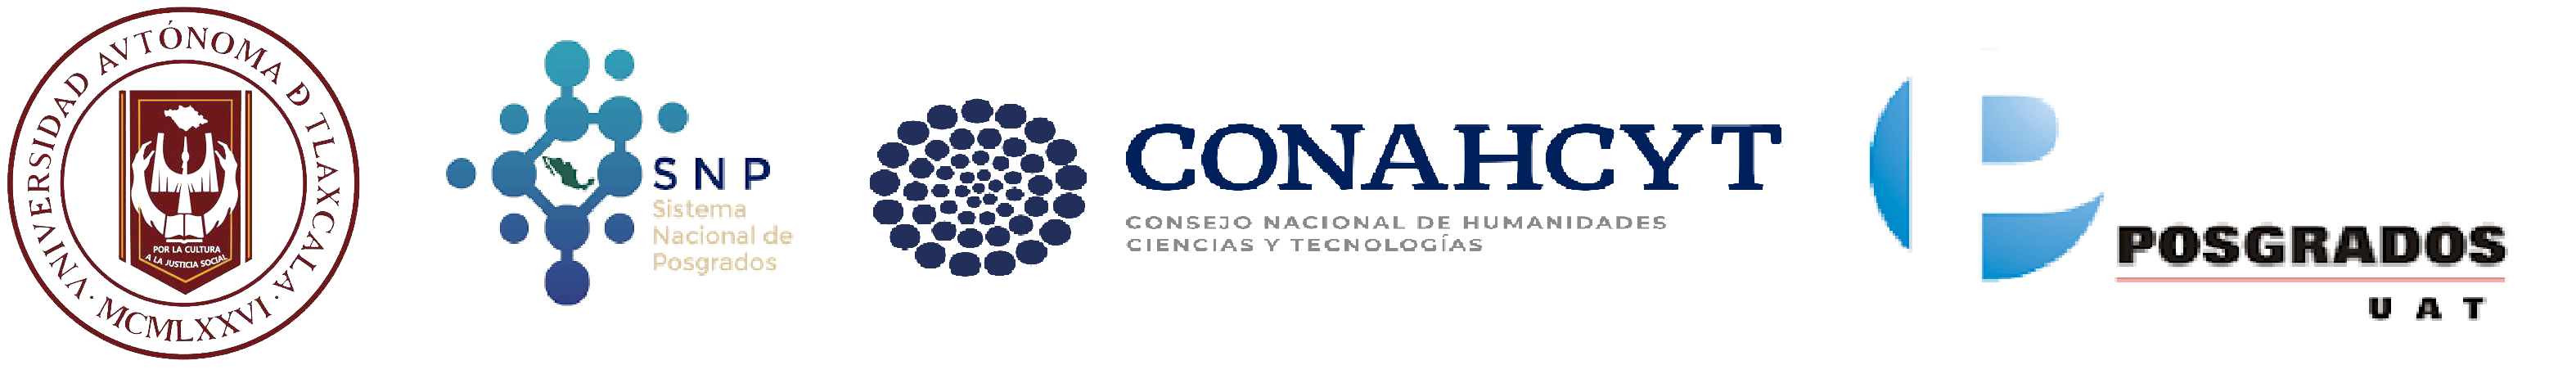 Logos UATx-Conahcyt